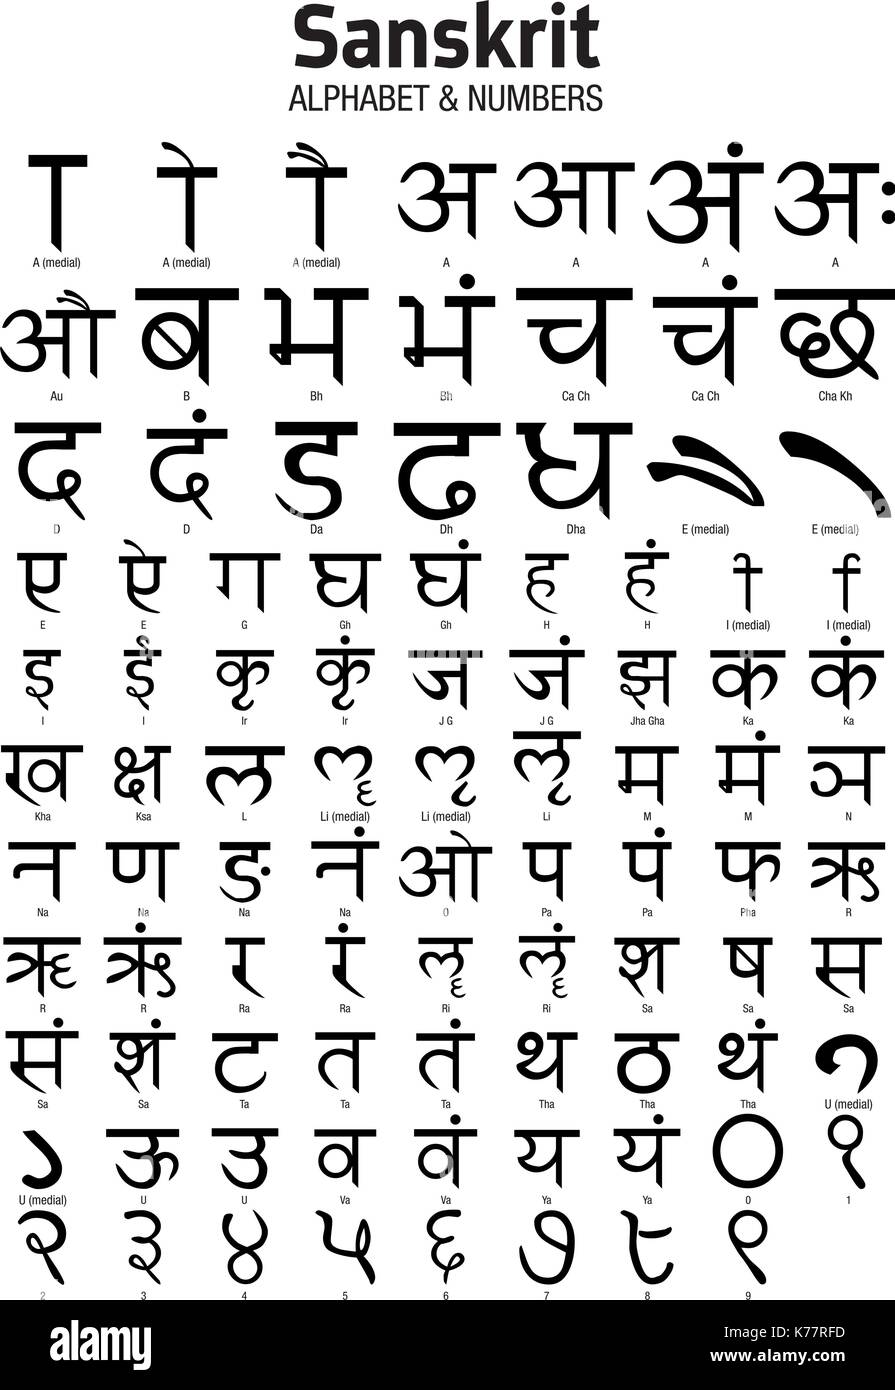 Sanskrit language - Alphabet & Numbers Stock Vector